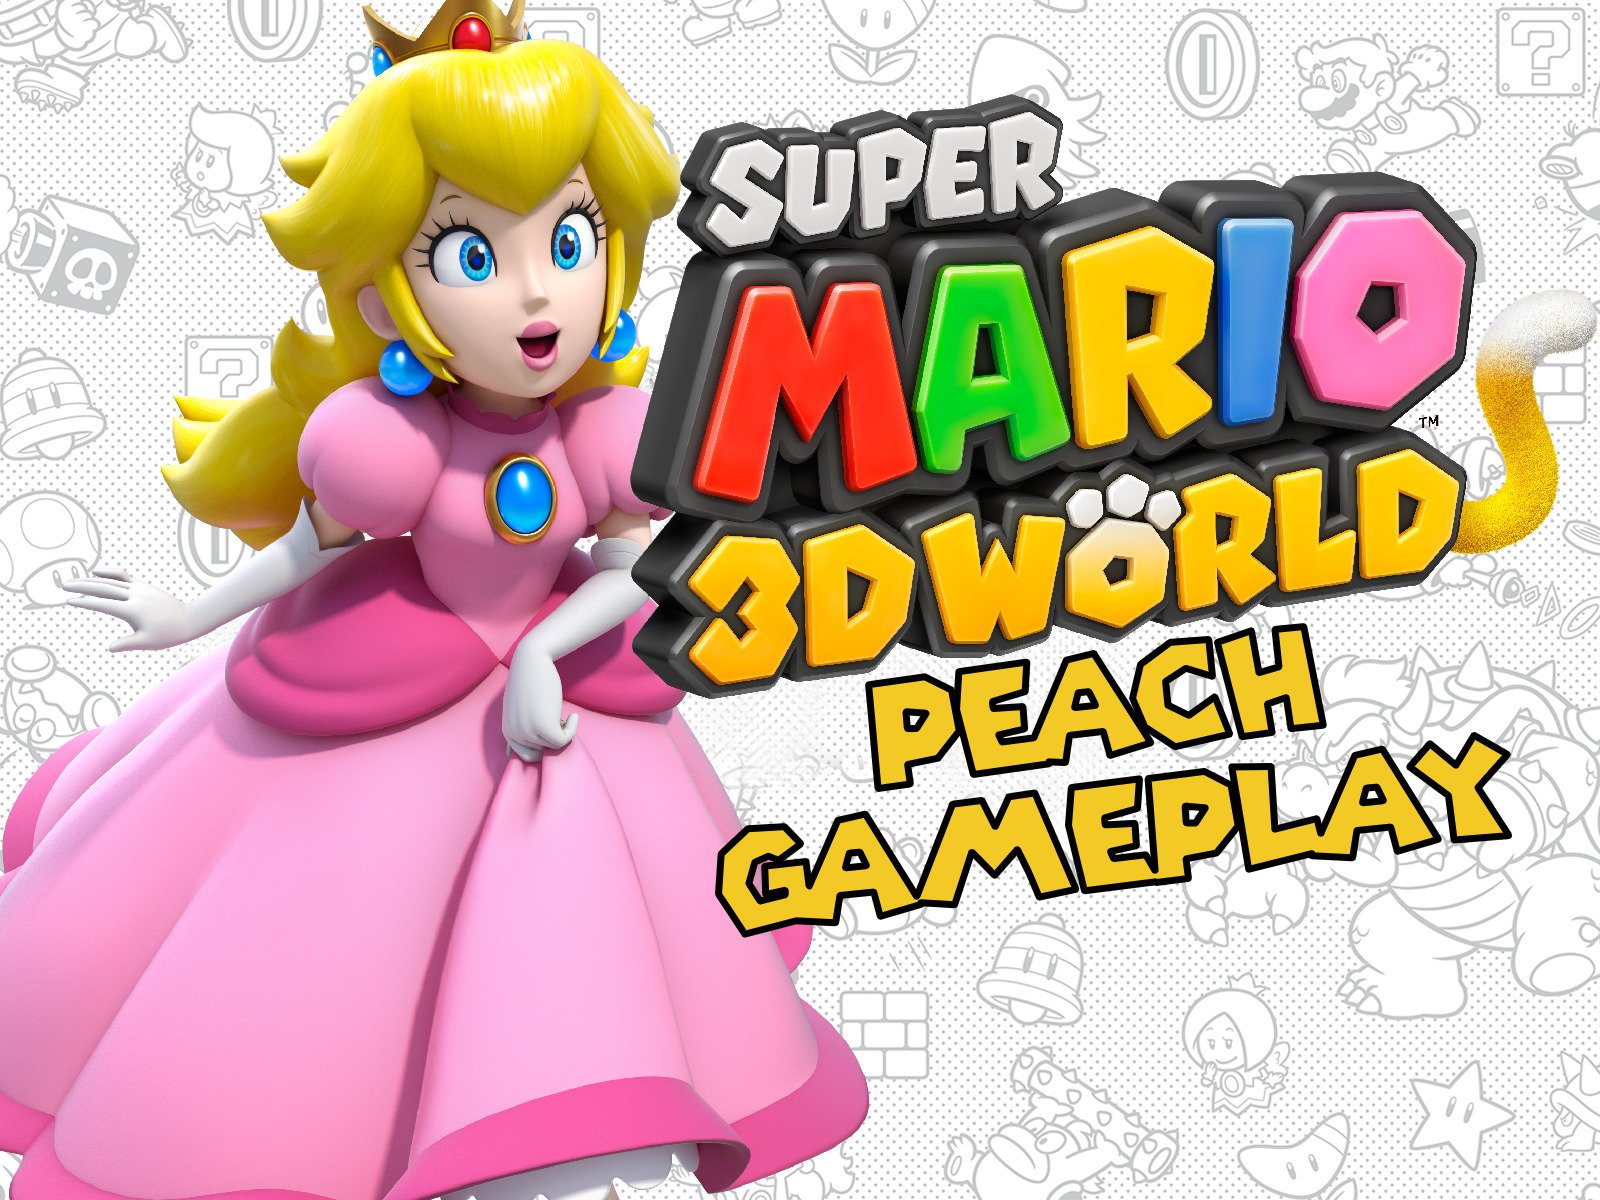 Super Mario 3d World Peach Gameplay On Amazon Prime - Super Mario 3d World - HD Wallpaper 